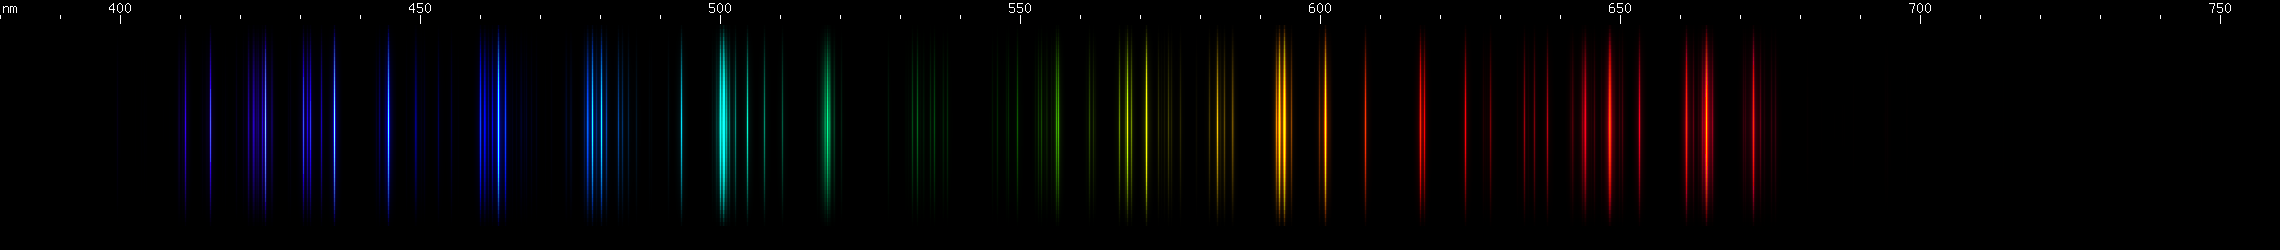 Spectral lines of Nitrogen.